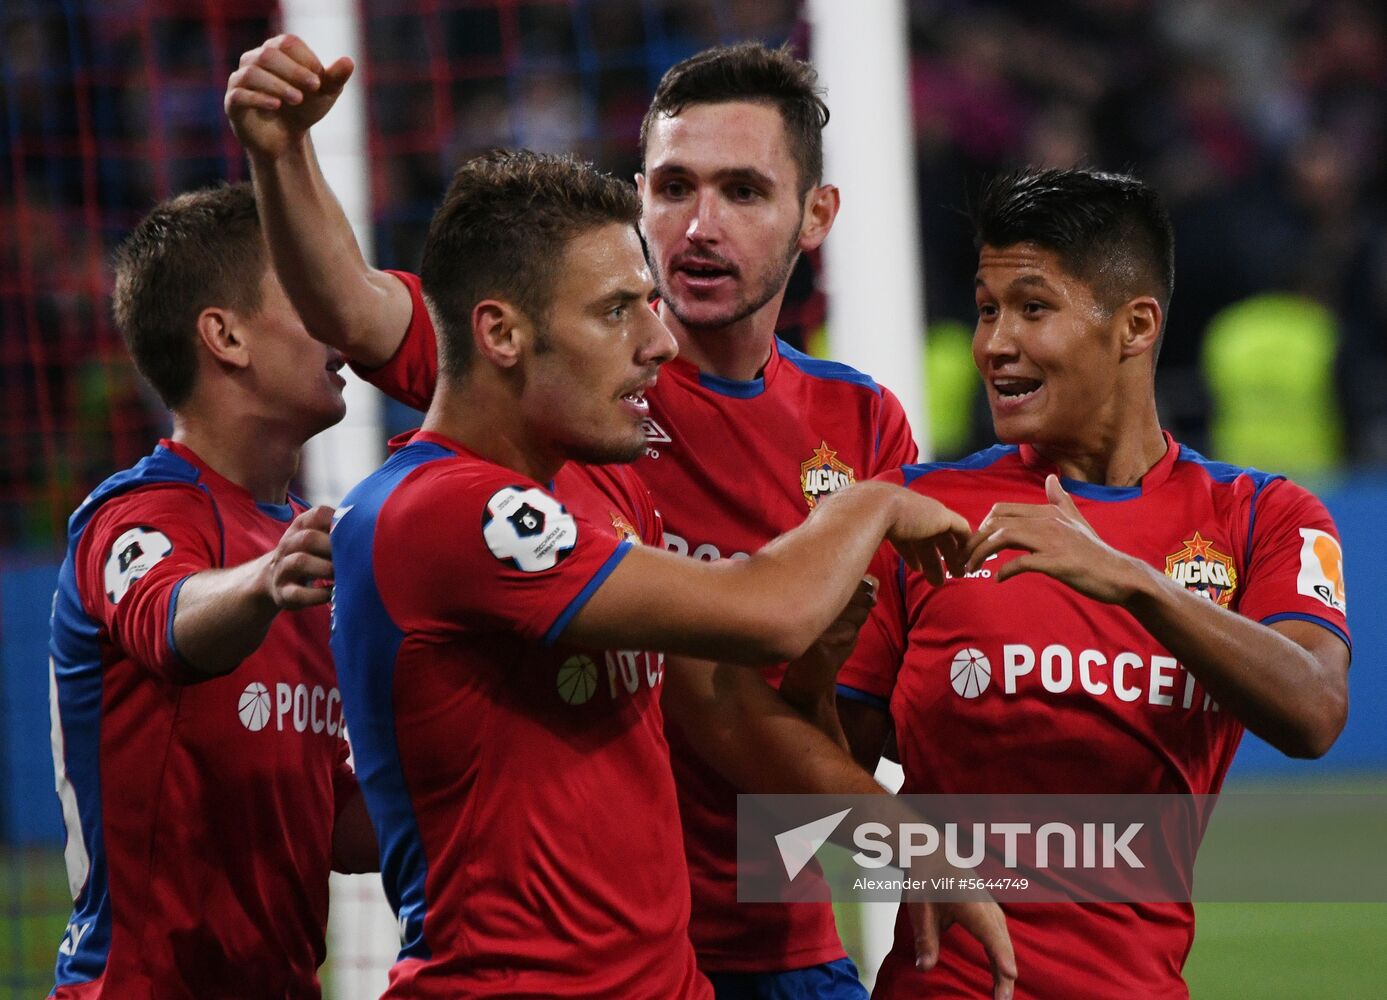 Russia Soccer CSKA - Spartak